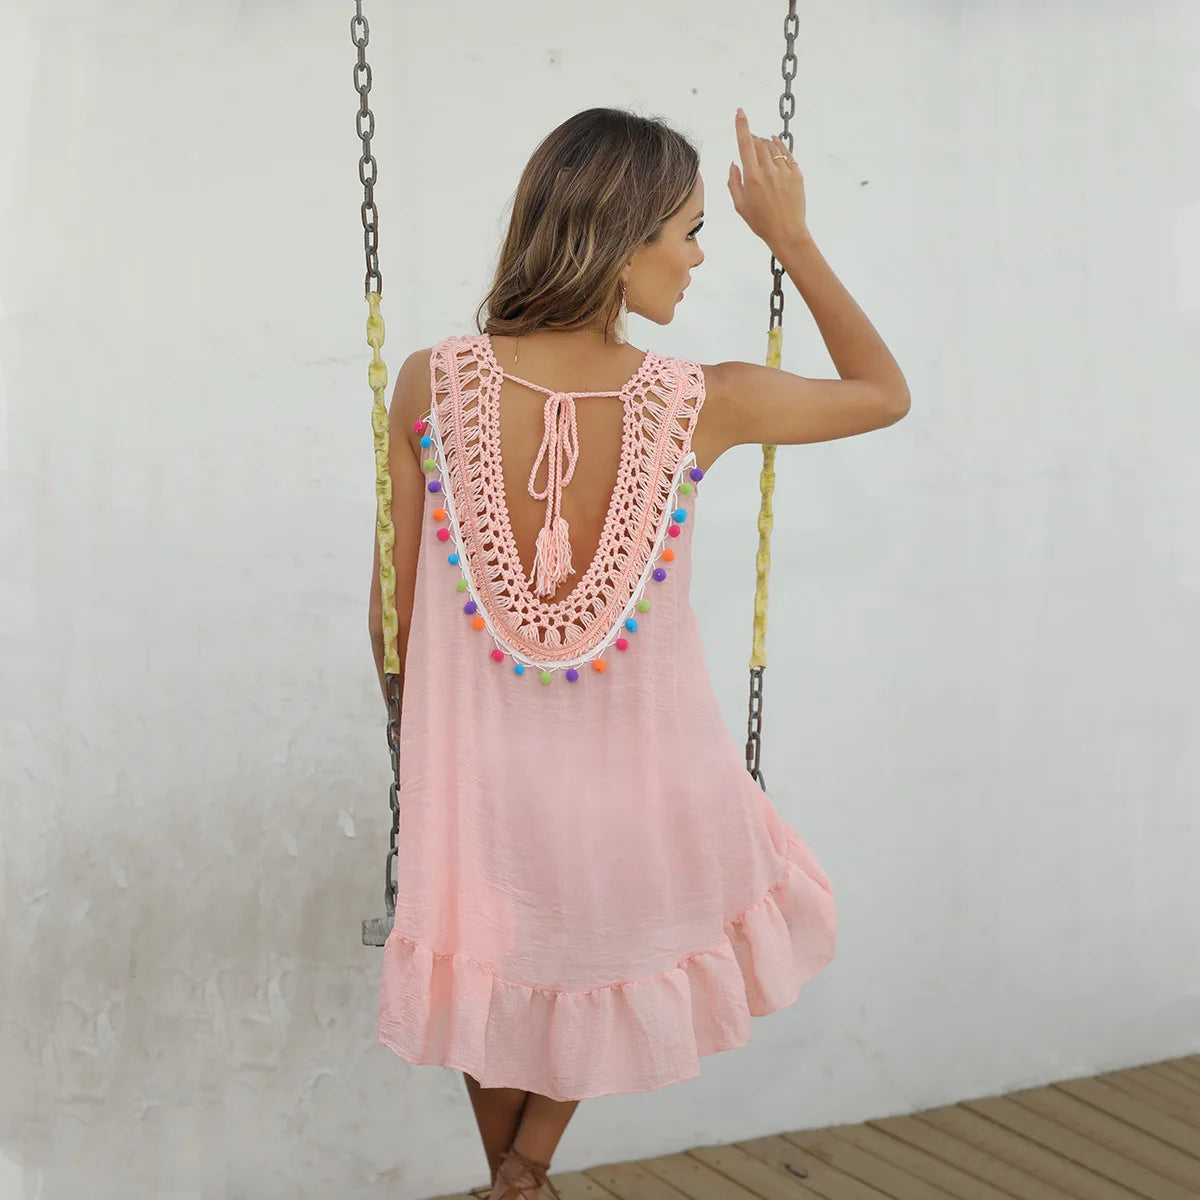 SORTYGO - Boho Charm Crochet Beach Dress in Pink